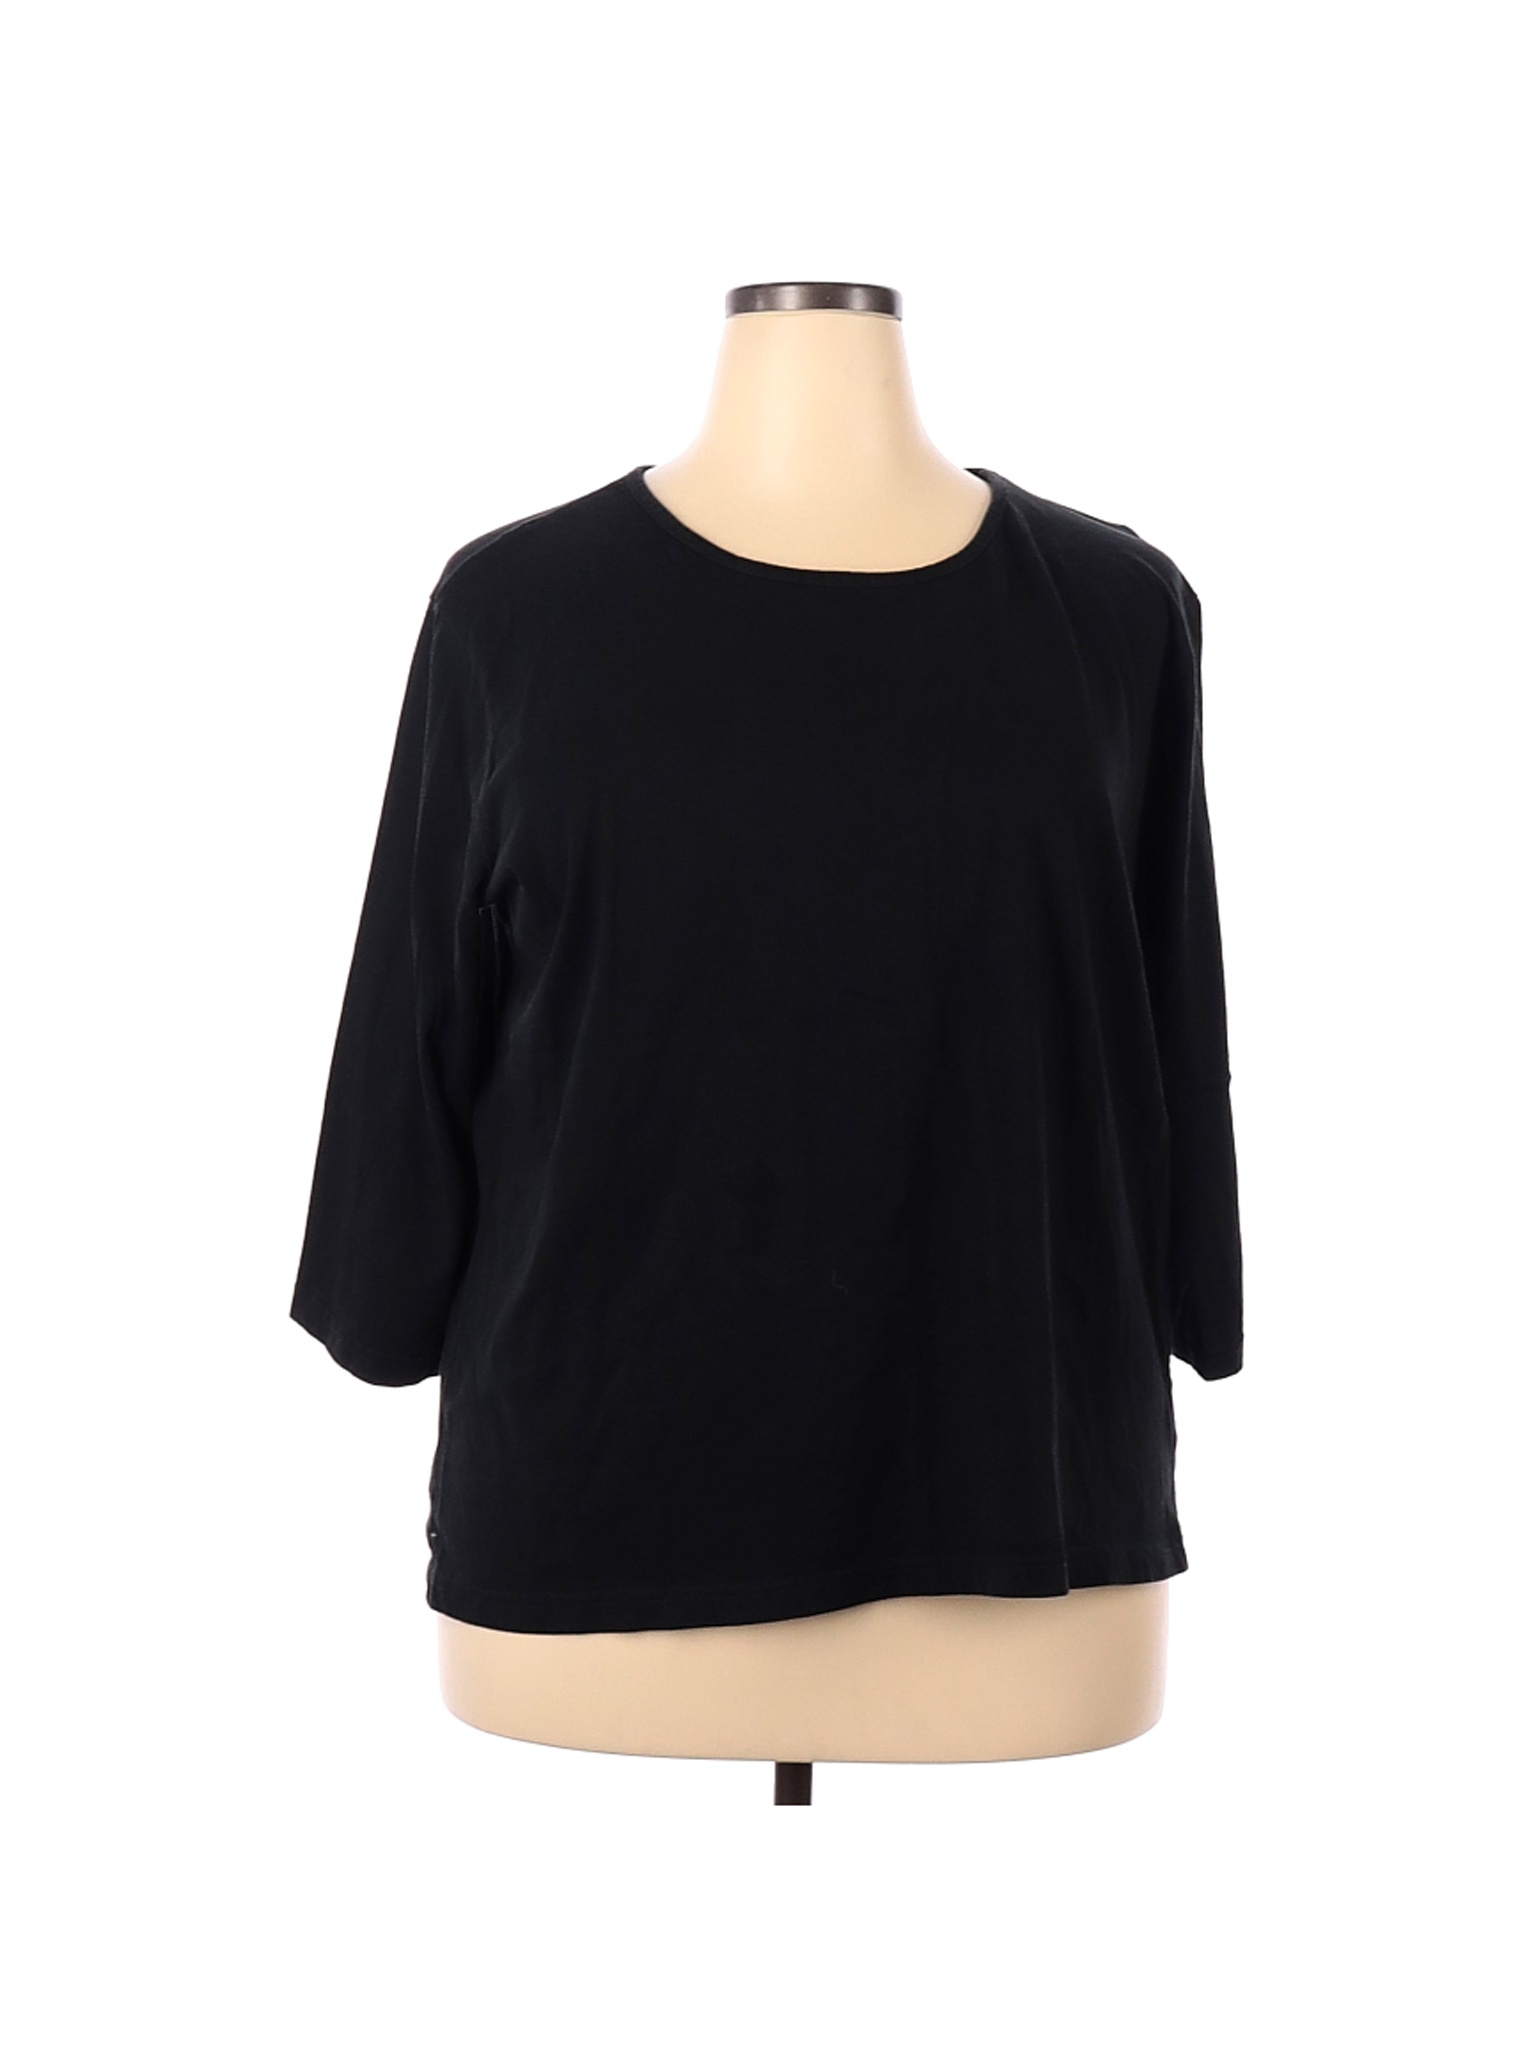 CW Classics 100% Cotton Solid Black Long Sleeve T-Shirt Size 2X (Plus ...